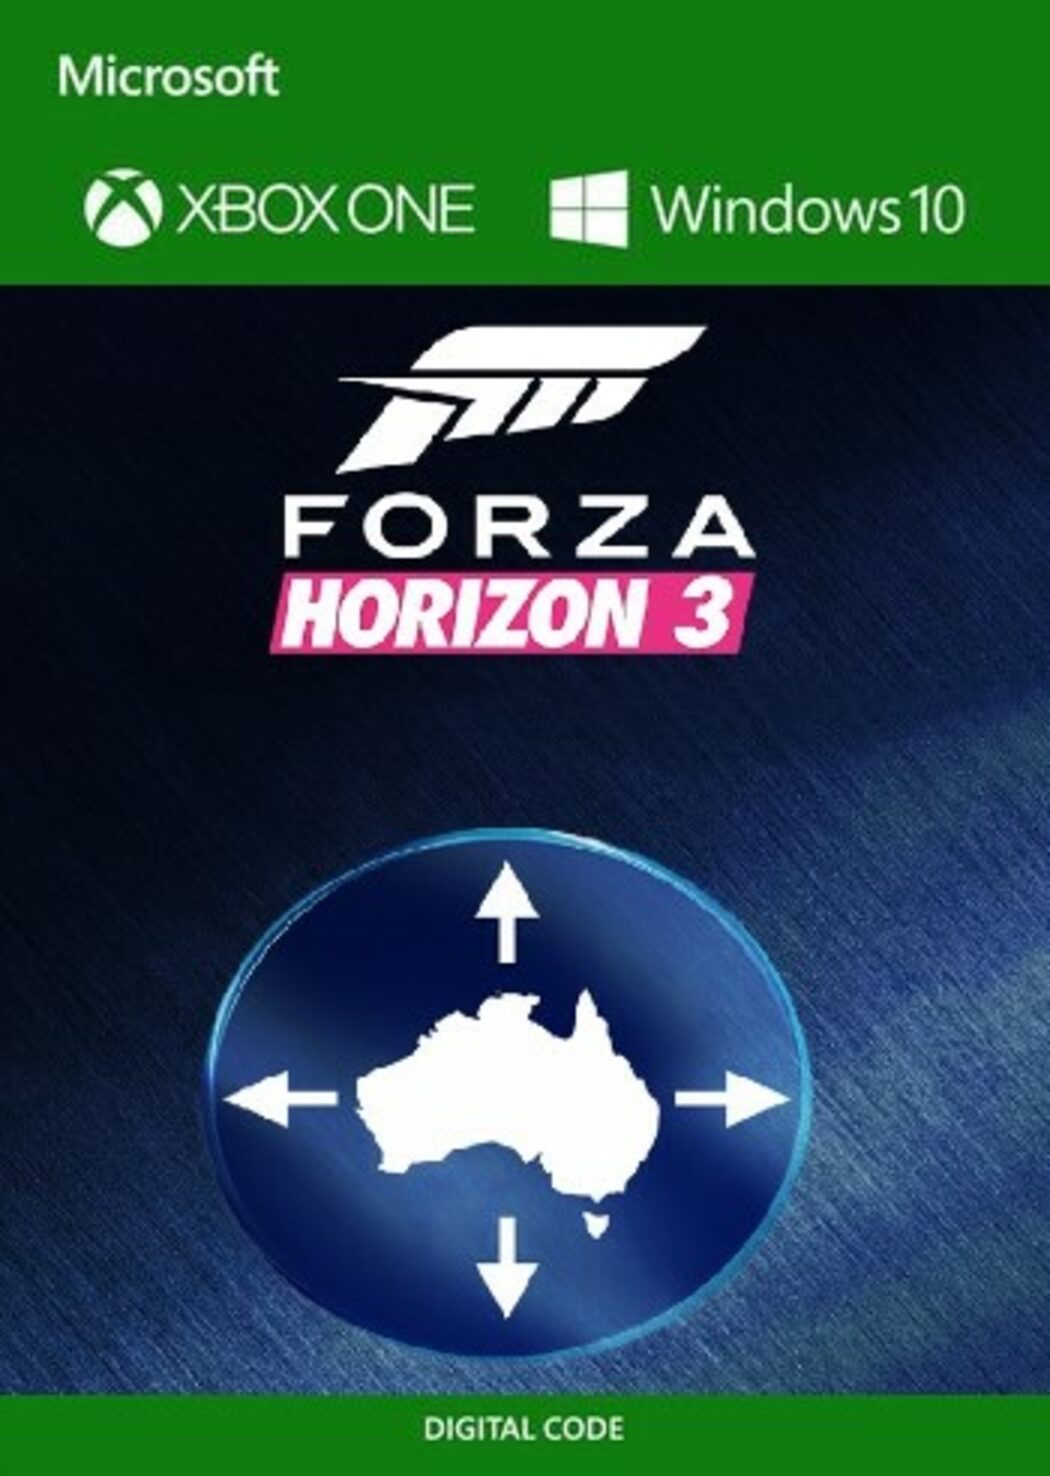 Forza Horizon 3 - Hot Wheels DLC XBOX One / Windows 10 CD Key 